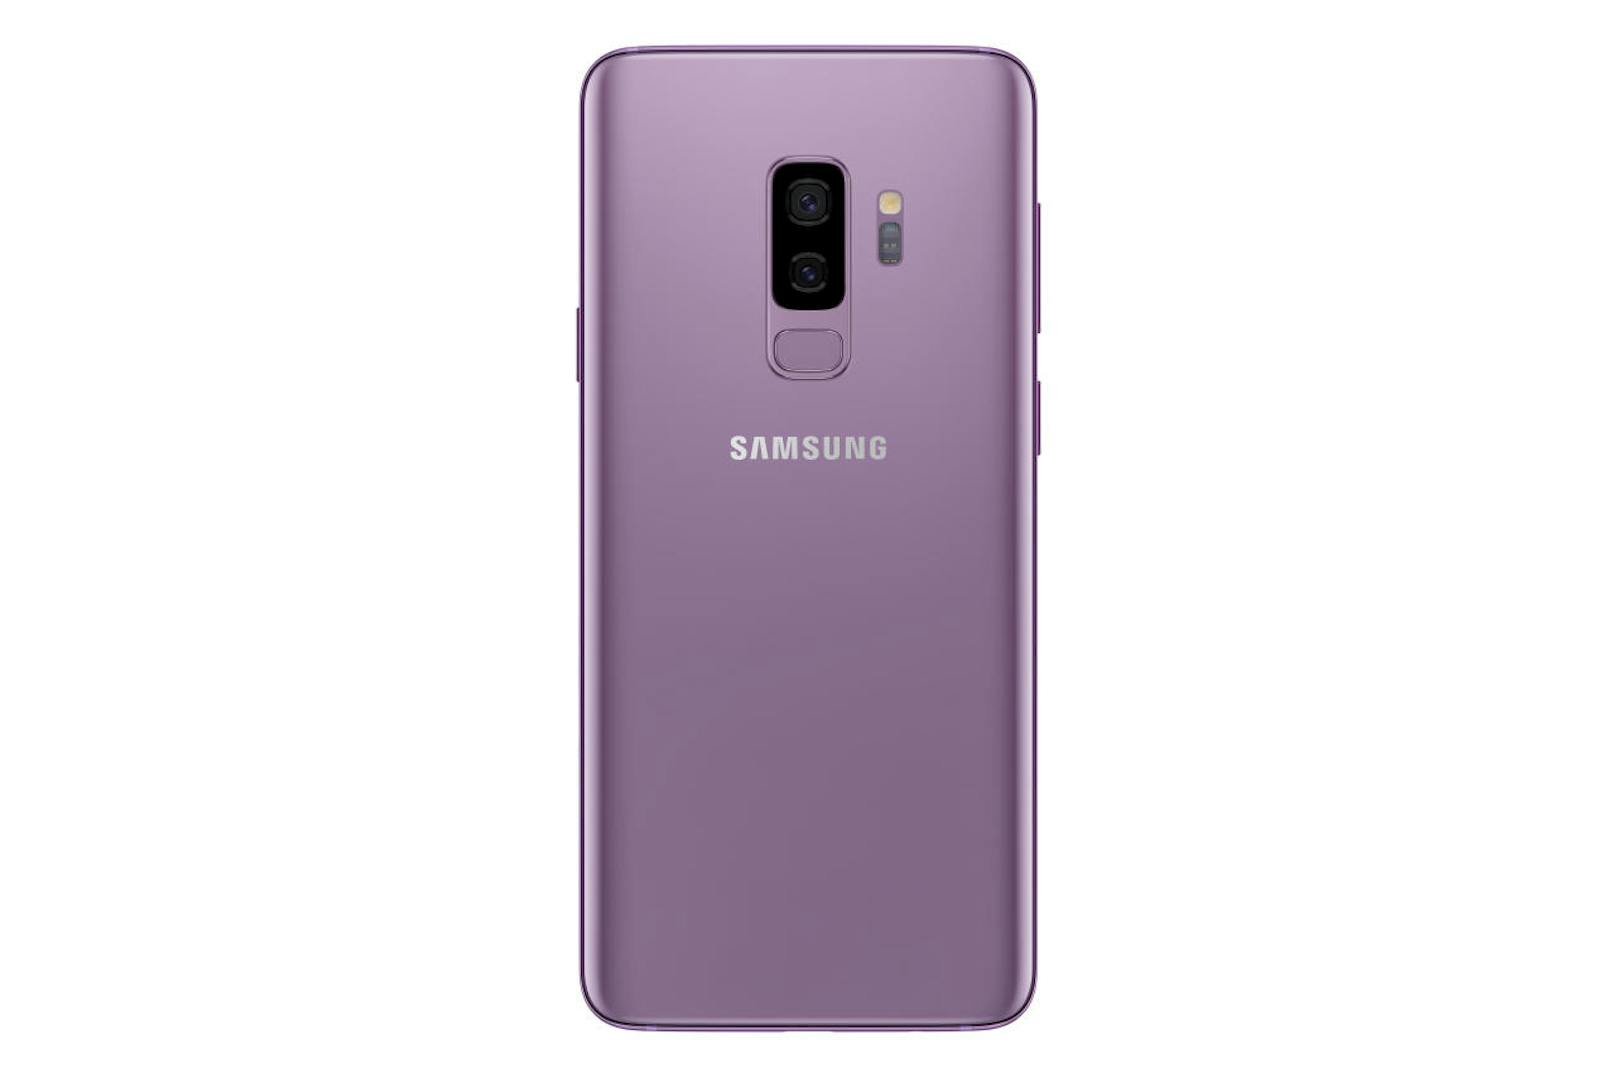 Das Samsung Galaxy S9+ mit Dual-Kamera